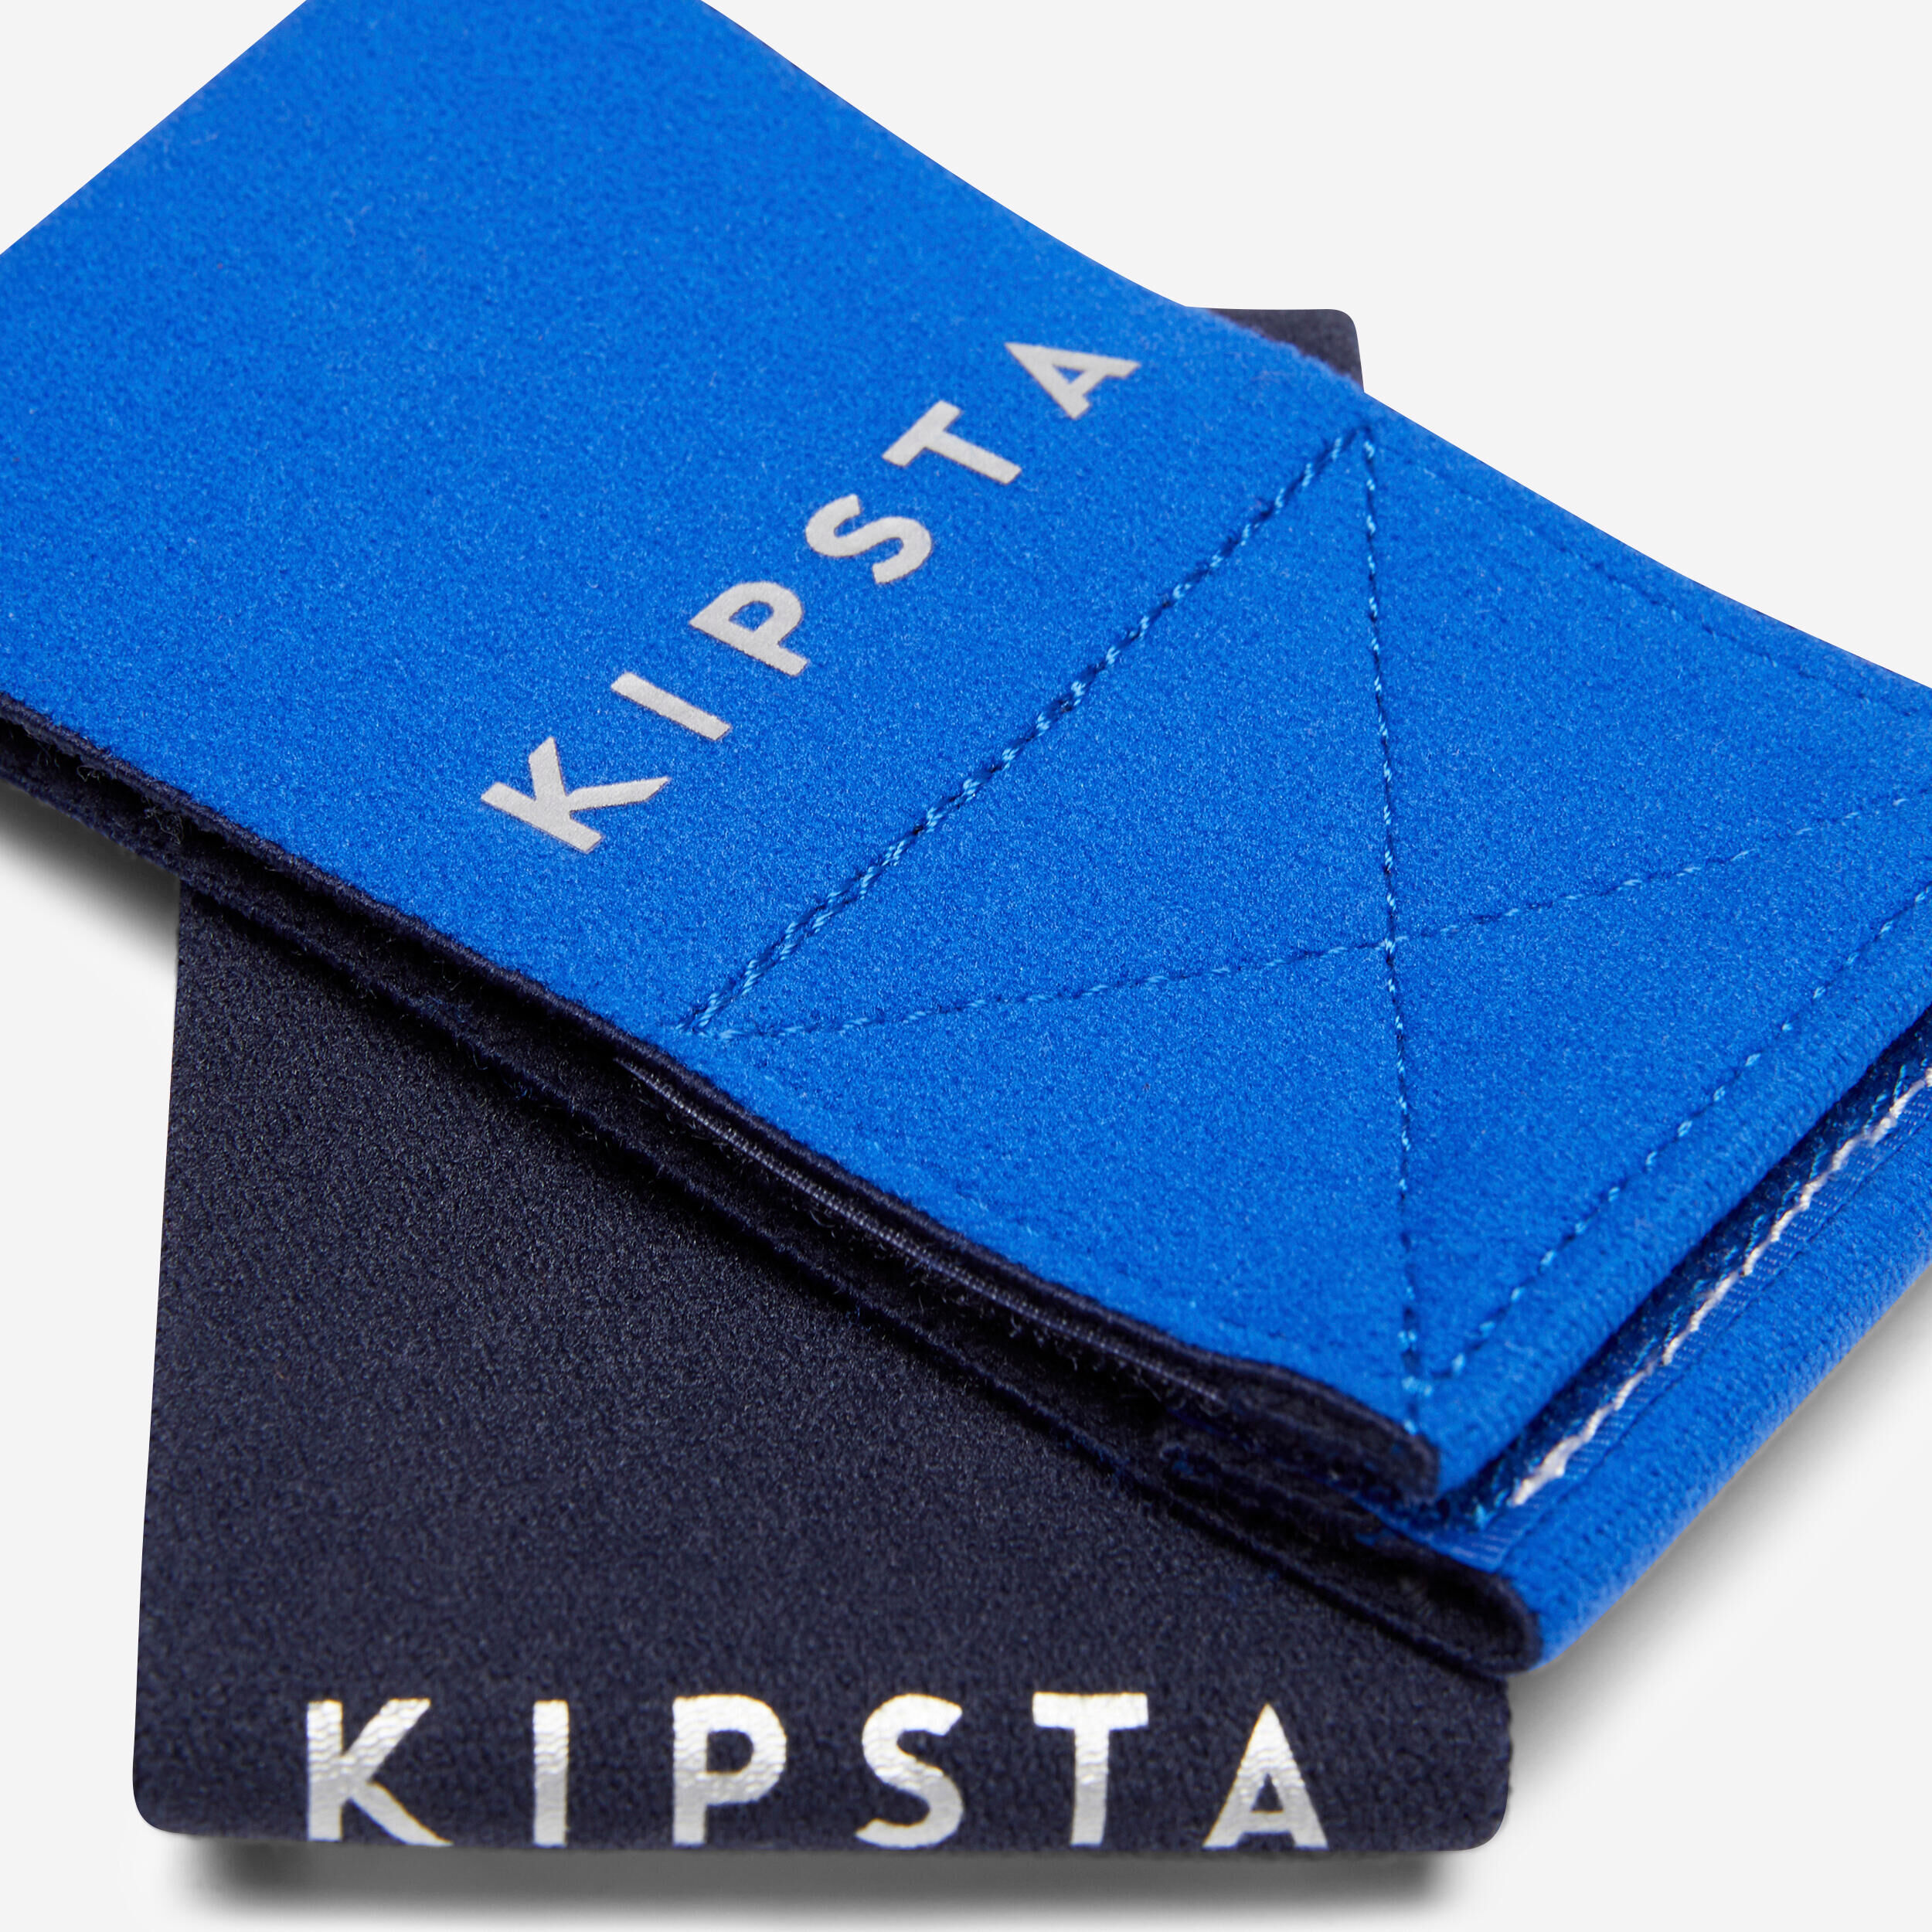 KIPSTA Reversible Support Strap - Royal or Navy Blue 